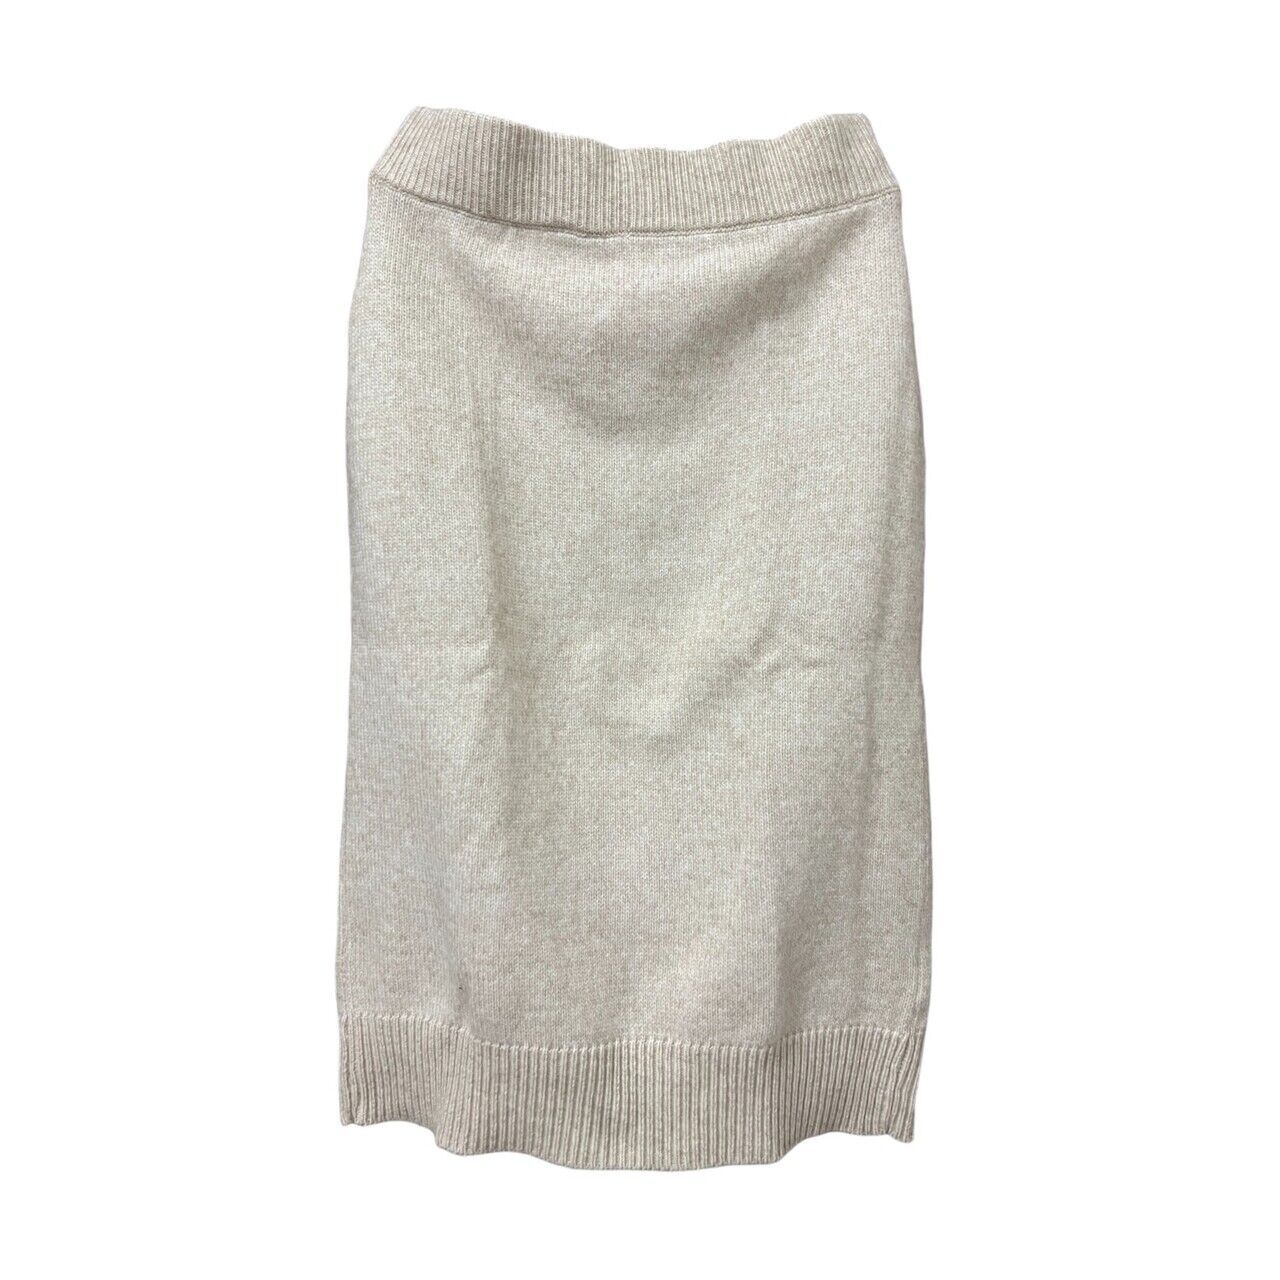 H&m Beige Knit Midi Skirt